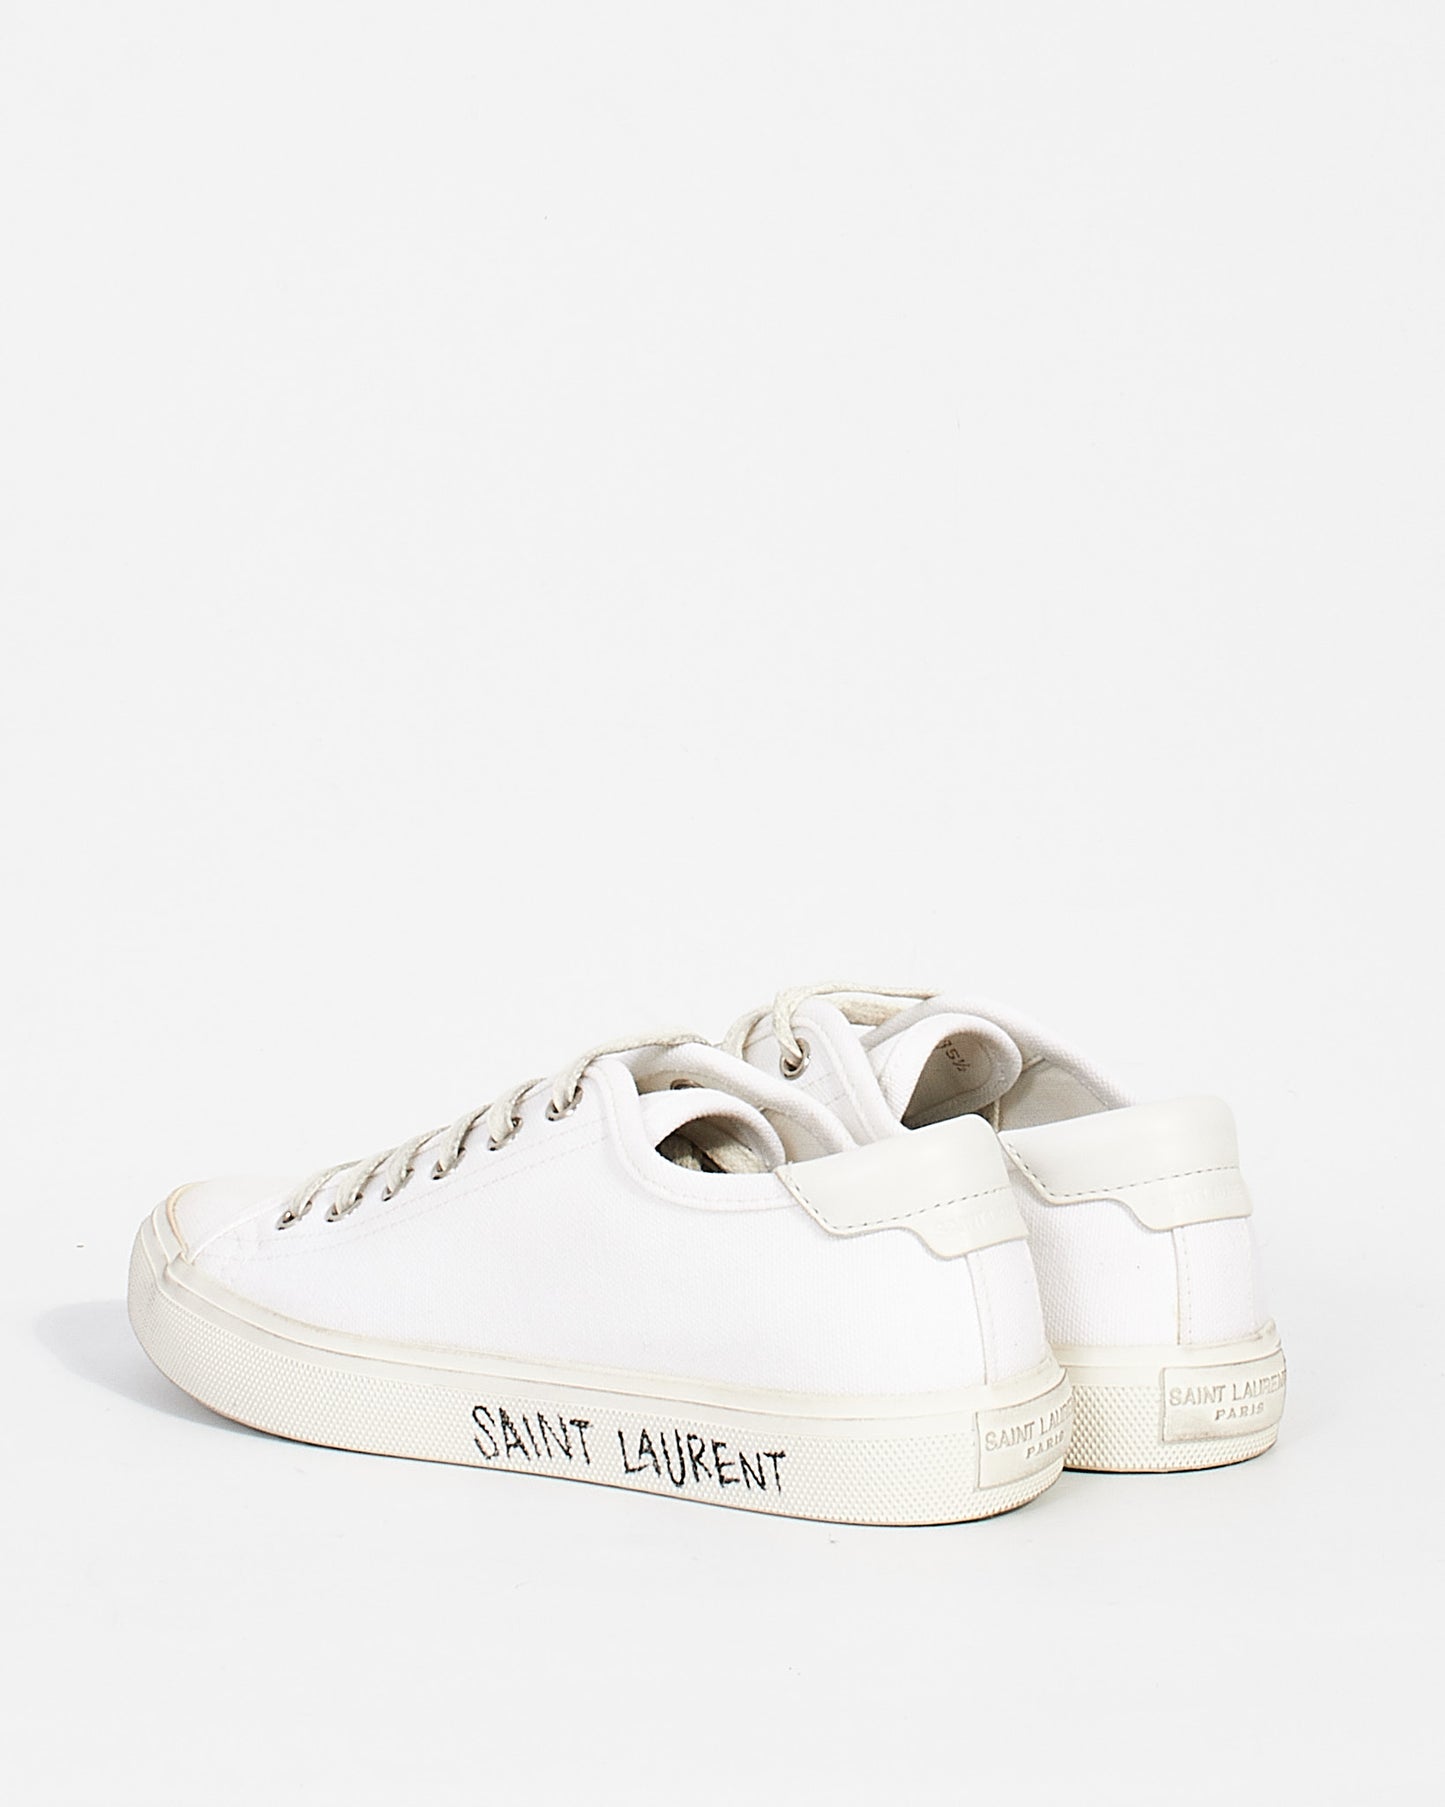 Saint Laurent White Canvas Malibu Low Top Sneakers - 35.5